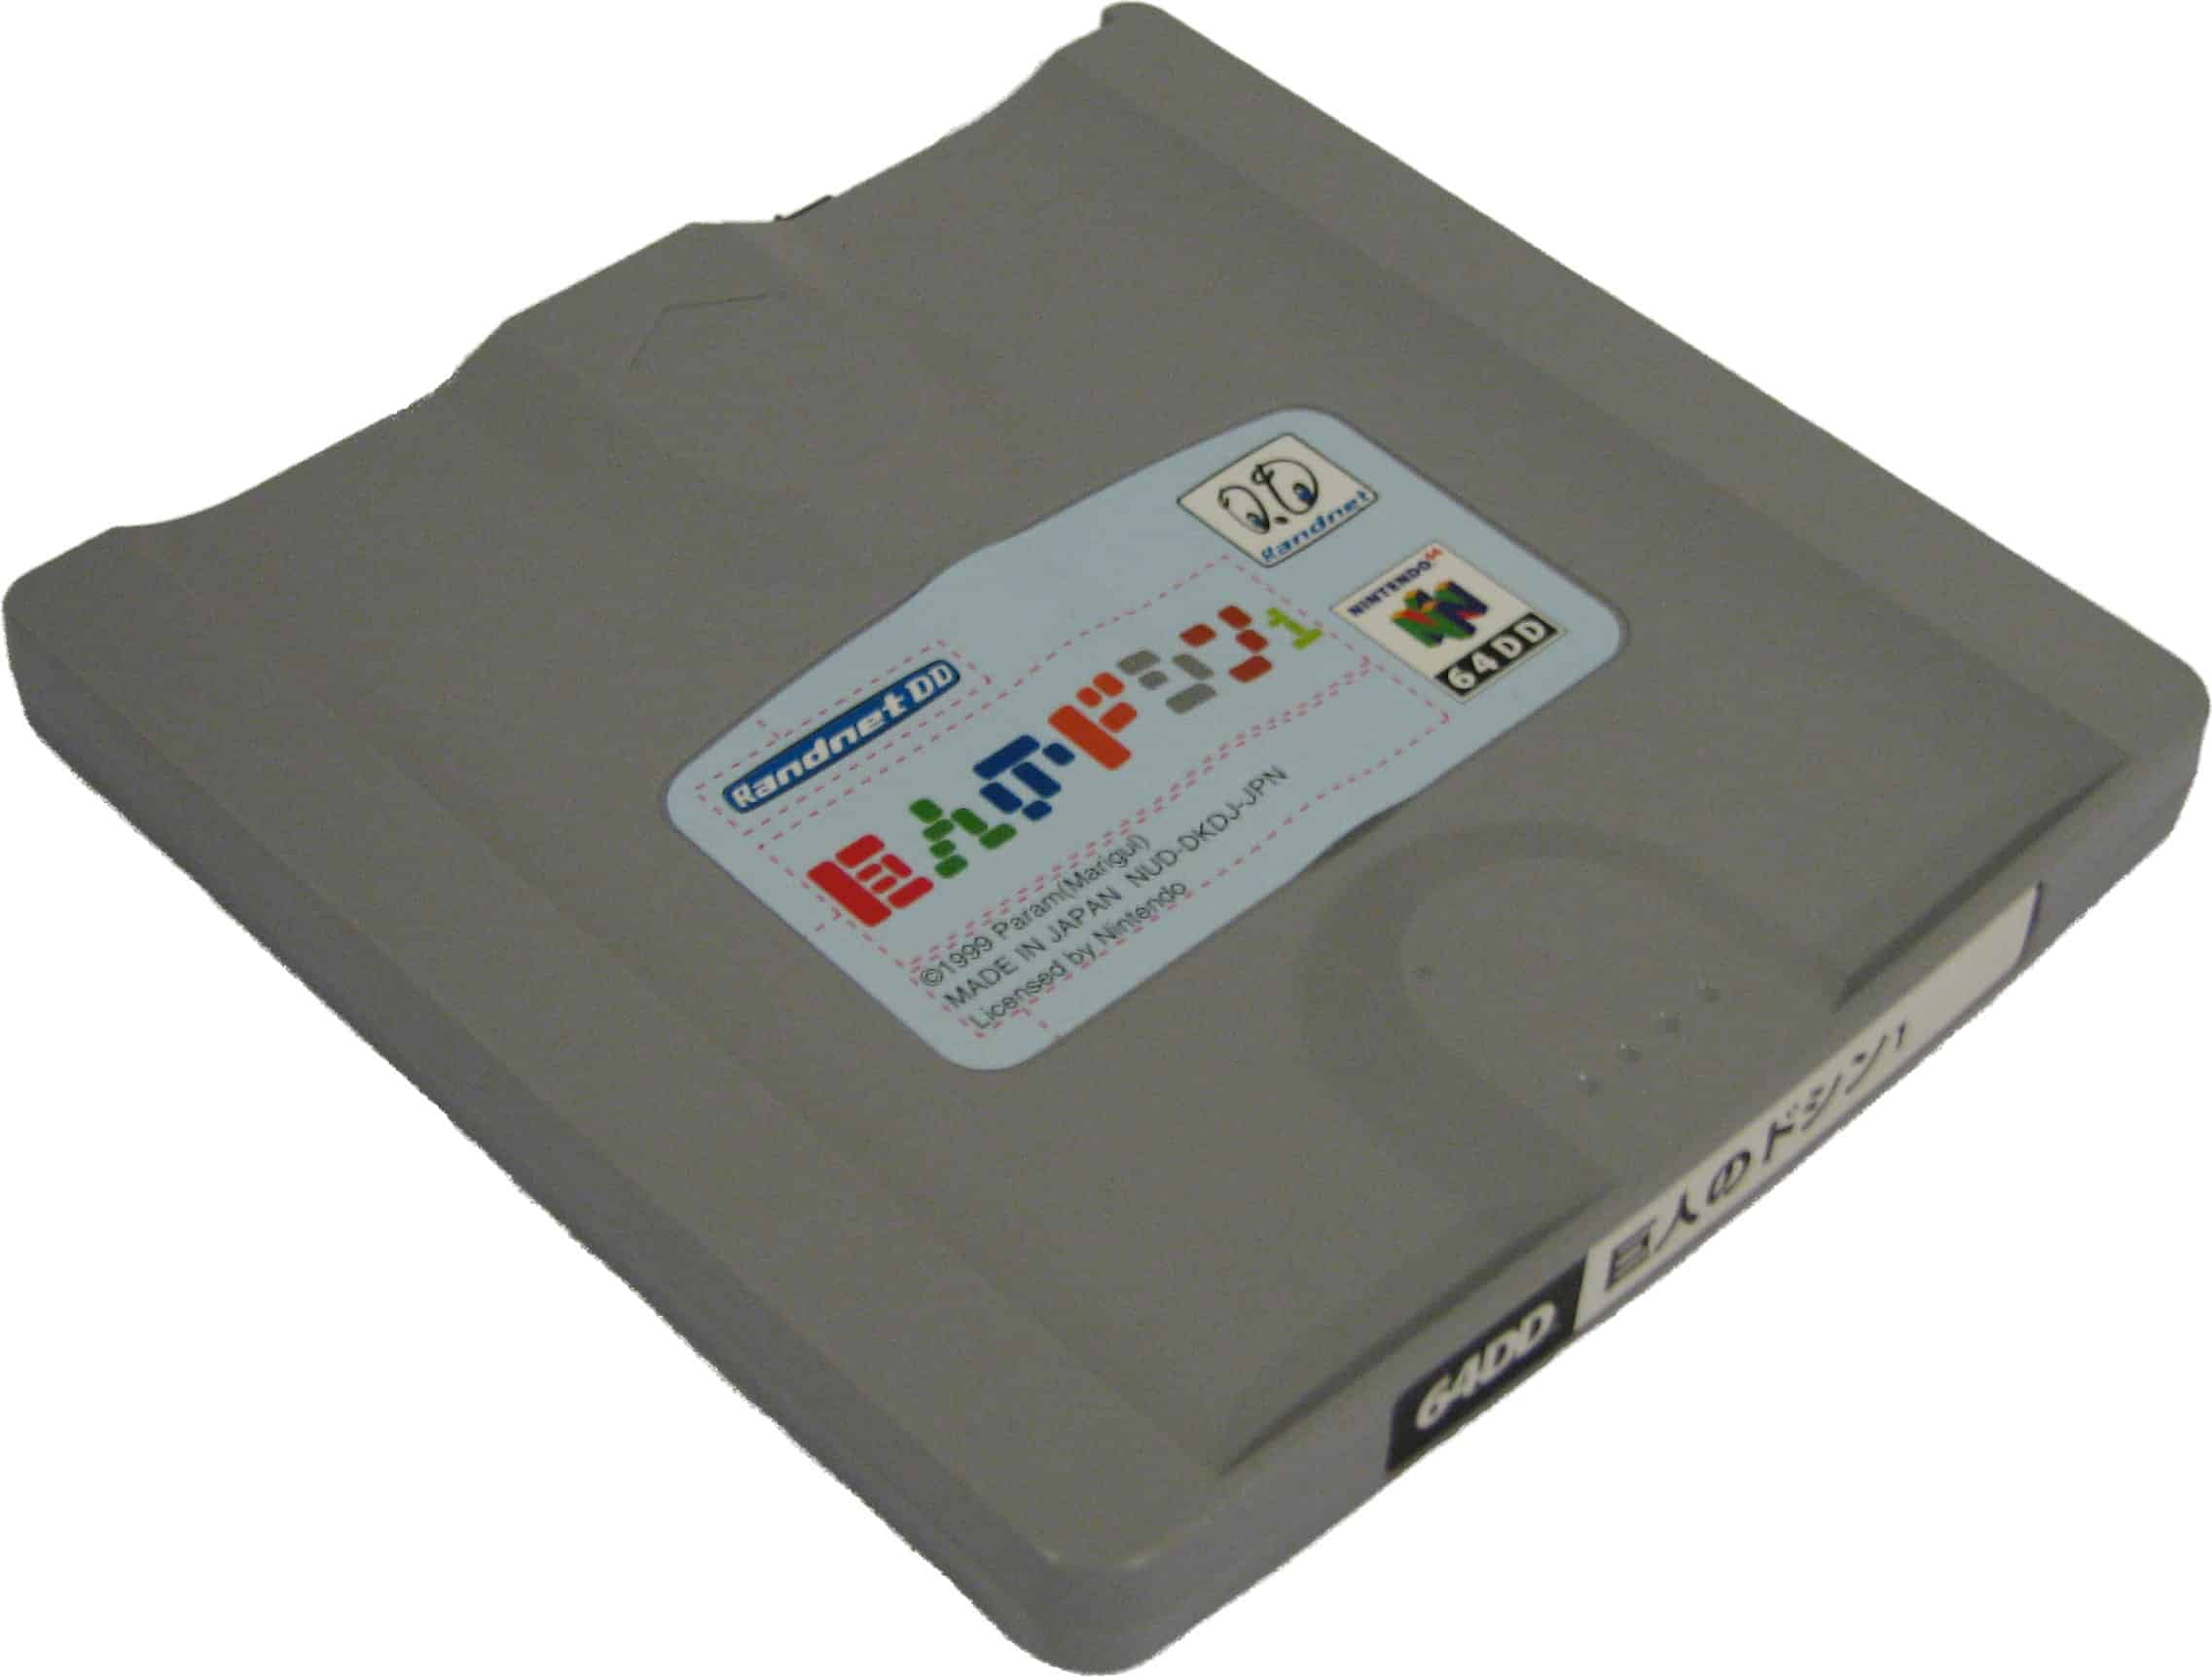 Grey Nintendo 64DD on a white background